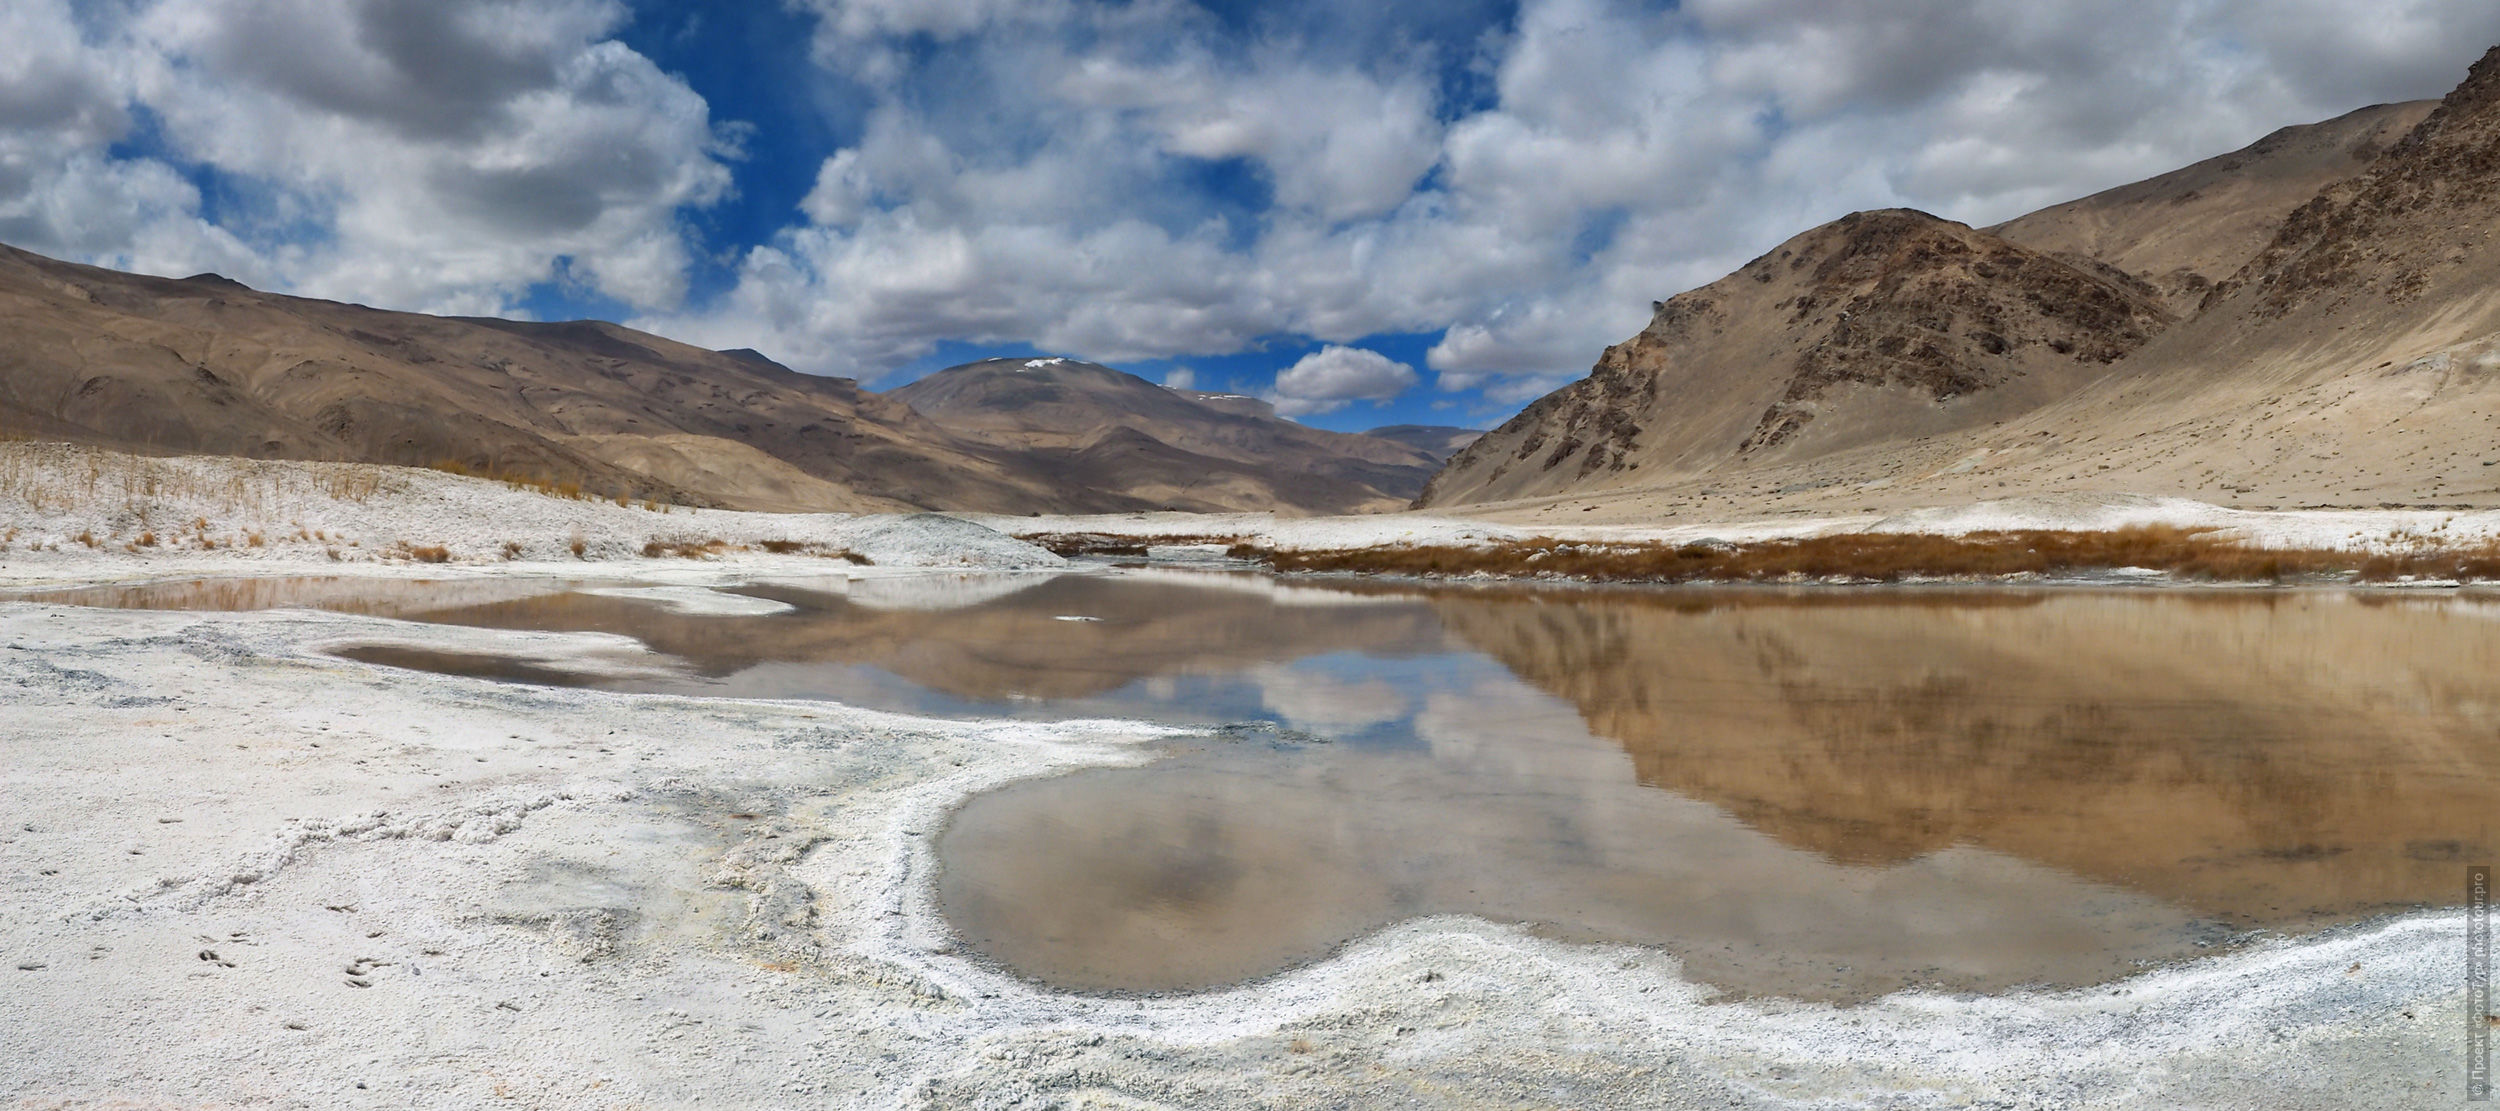 Alpine valley of geysers near Tso Kar lake, Ladakh. Advertising Tibet Lake Tour: Alpine lakes, valley of geysers, Lamayuru, Tsvetnoye Gory, 01 - 10.09. 2022 year.